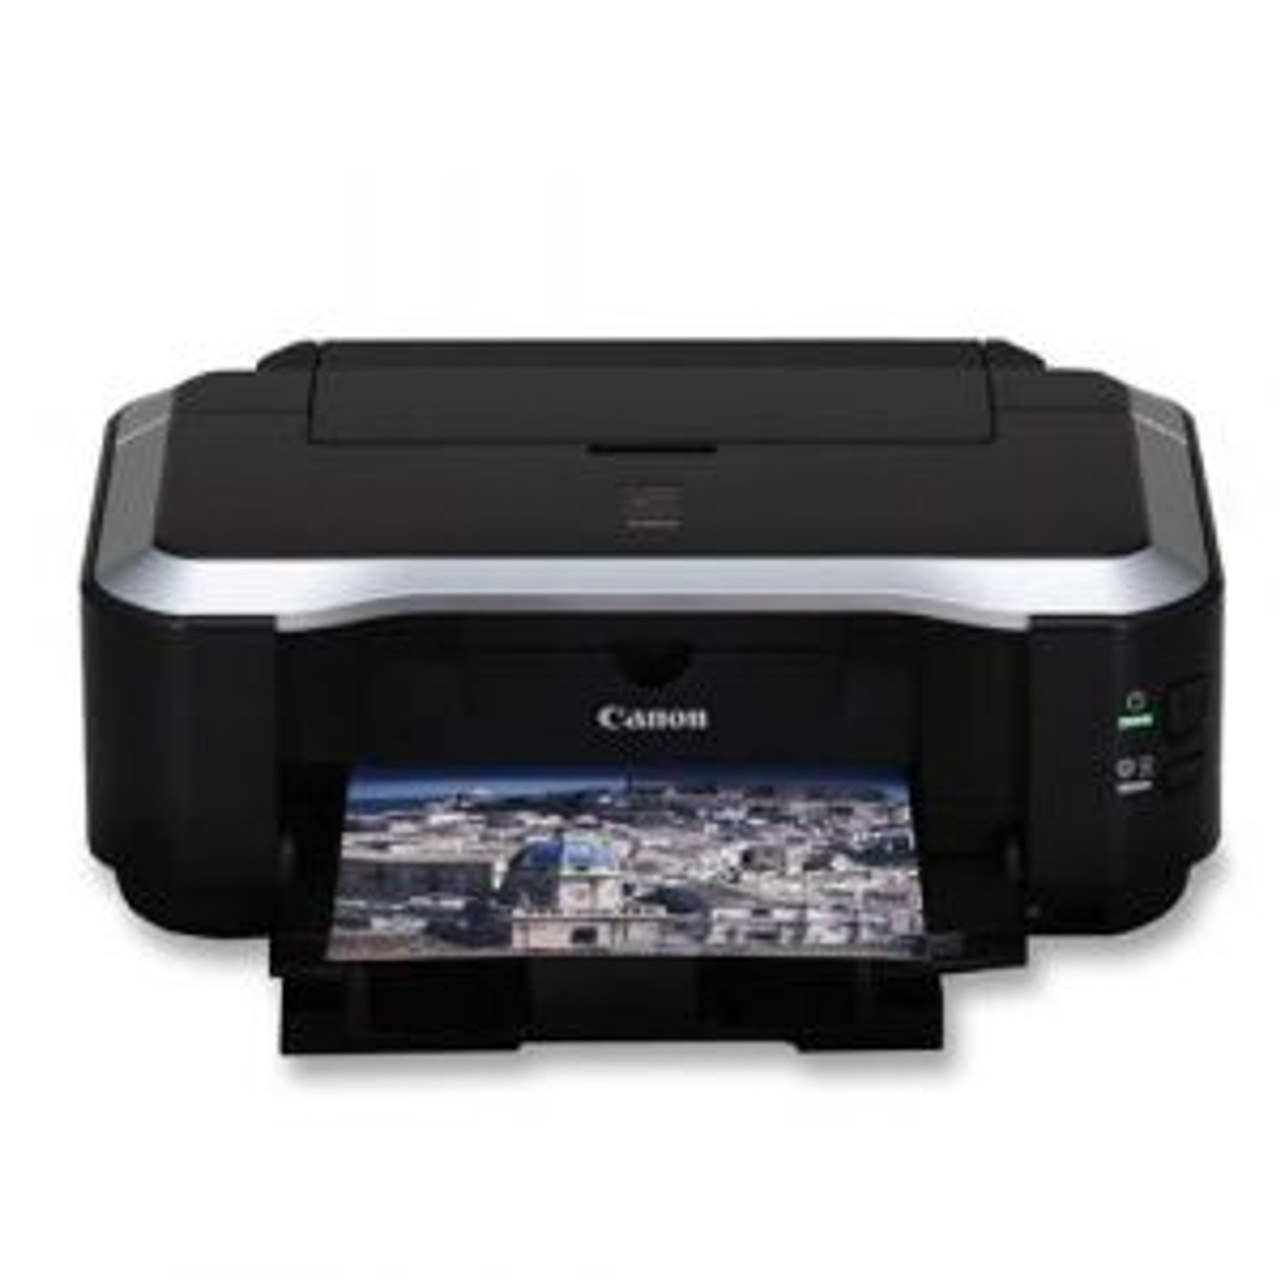 Printers & Cartridges,Printer,Inkjet printers,Canon,2909B002